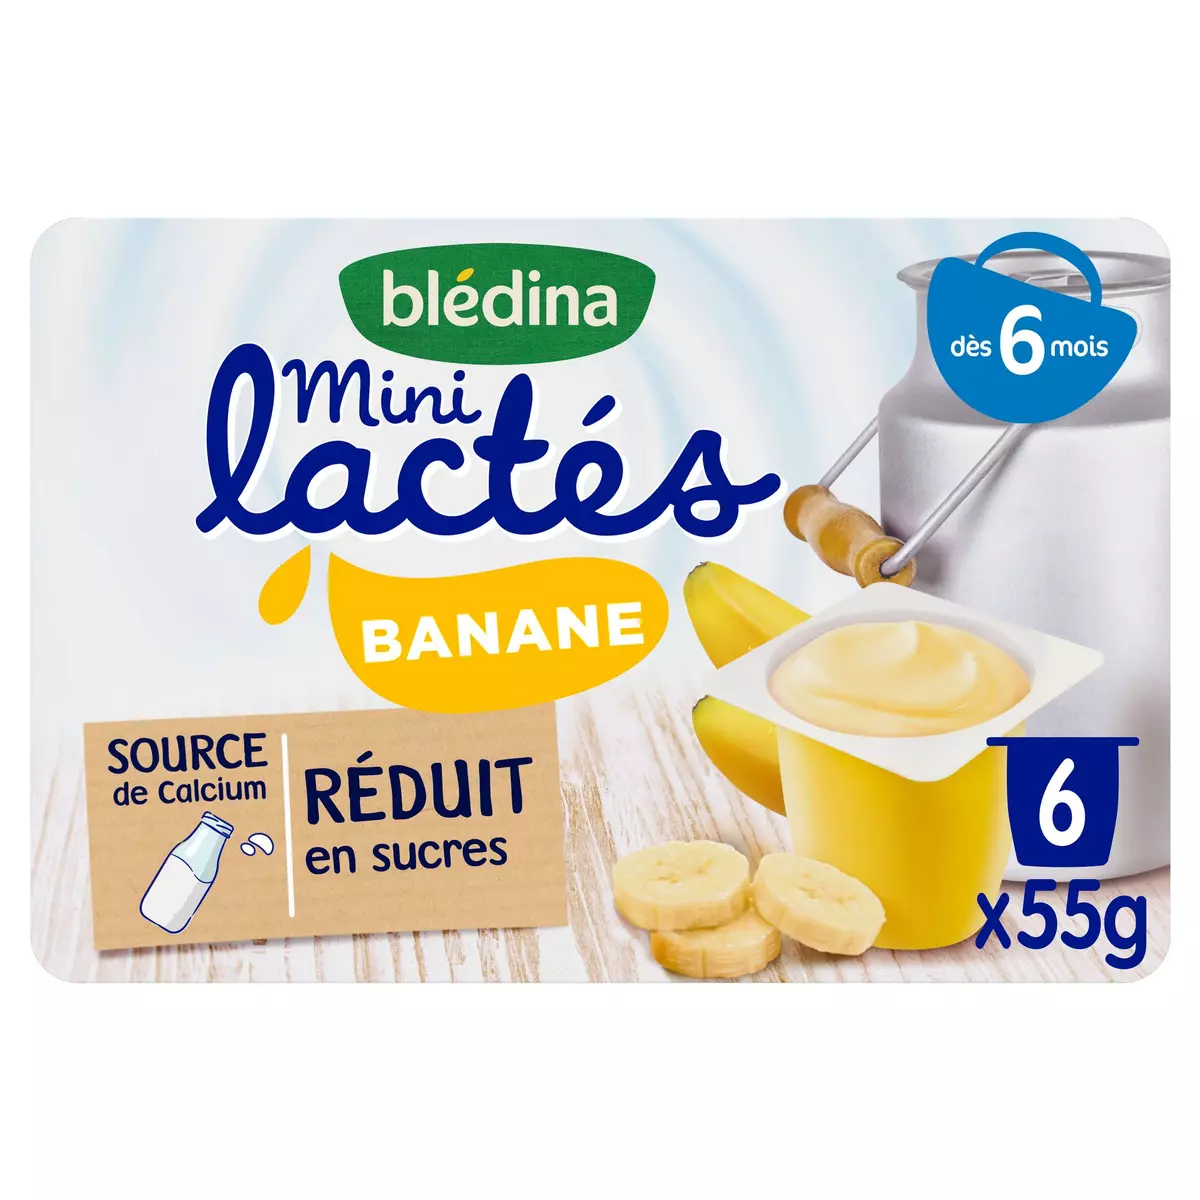 Petit pot bananes - dès 4/6 mois, Blédina (2 x 130 g)